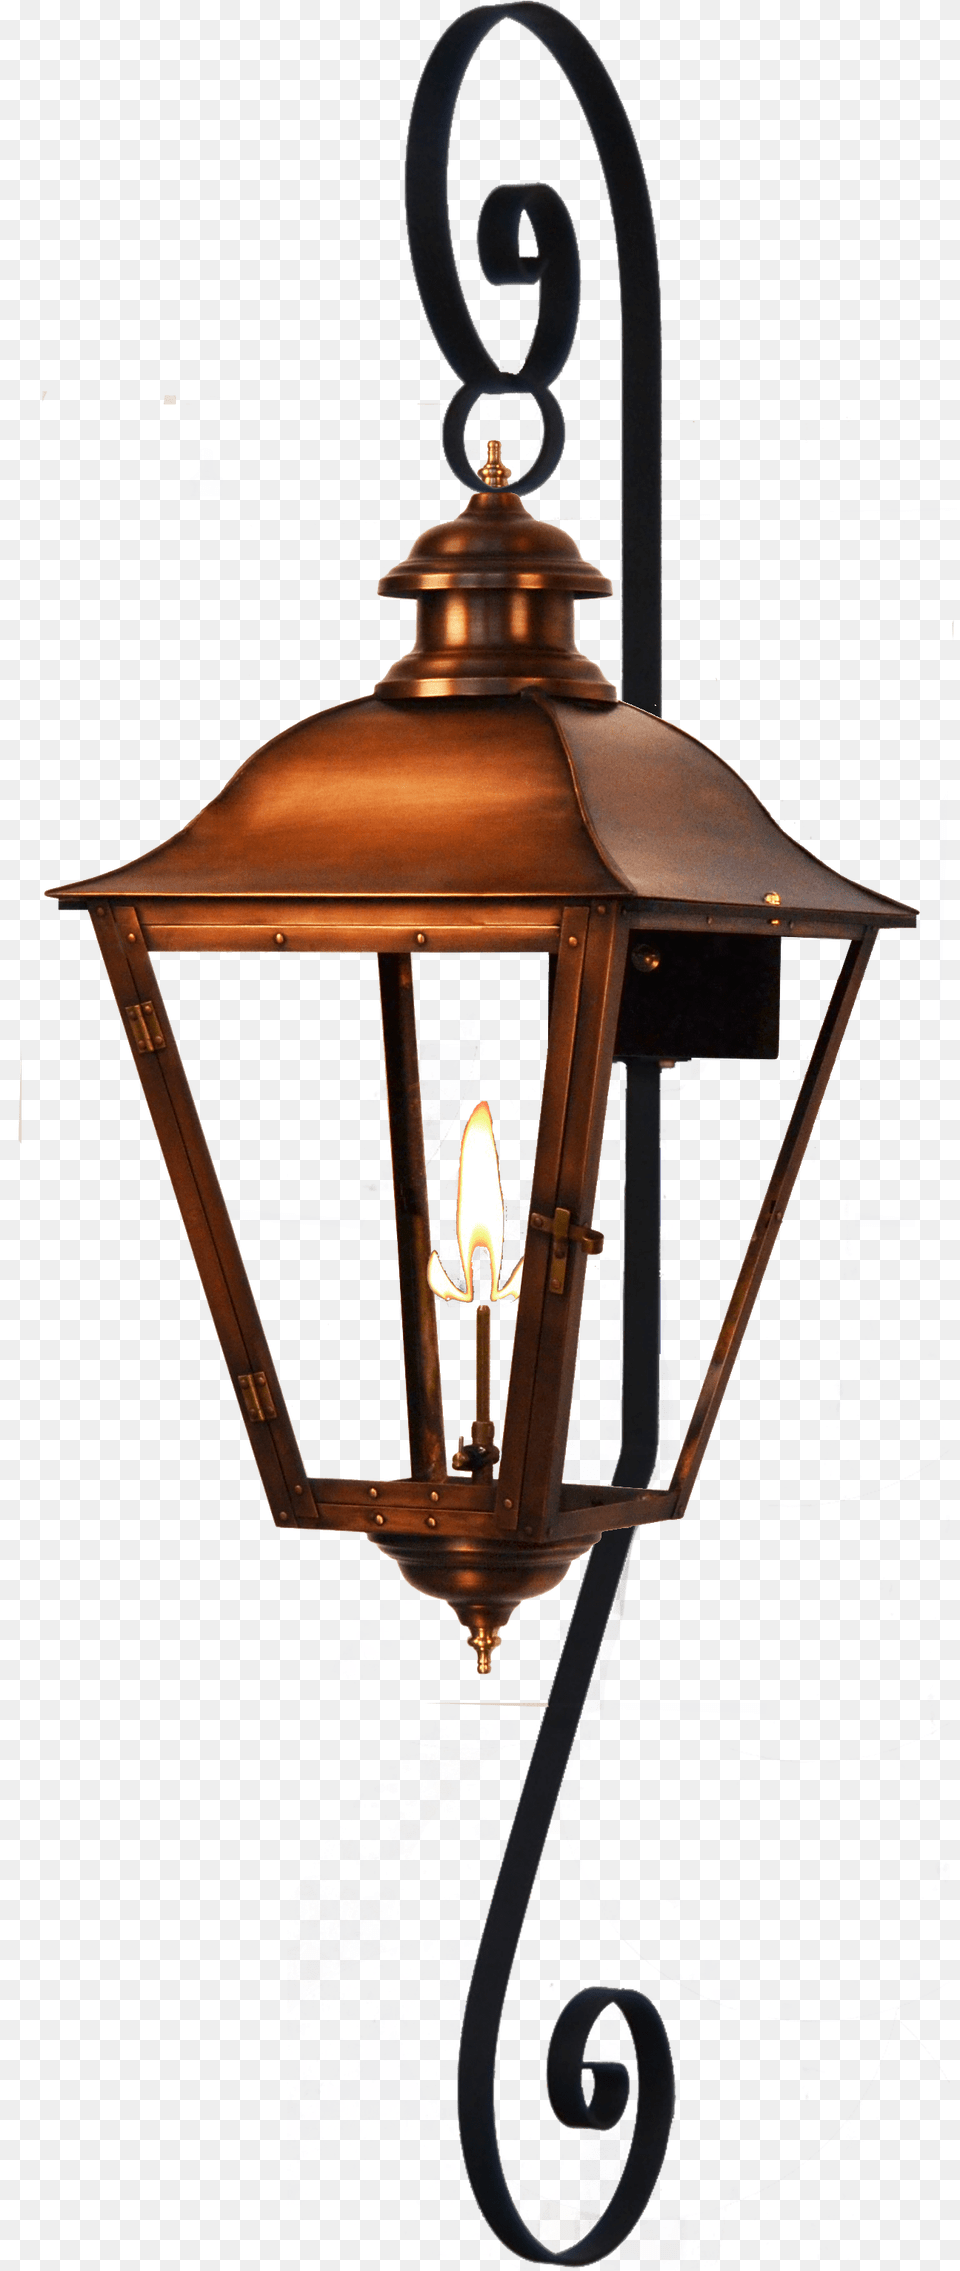 Gas Lamp, Lampshade Png